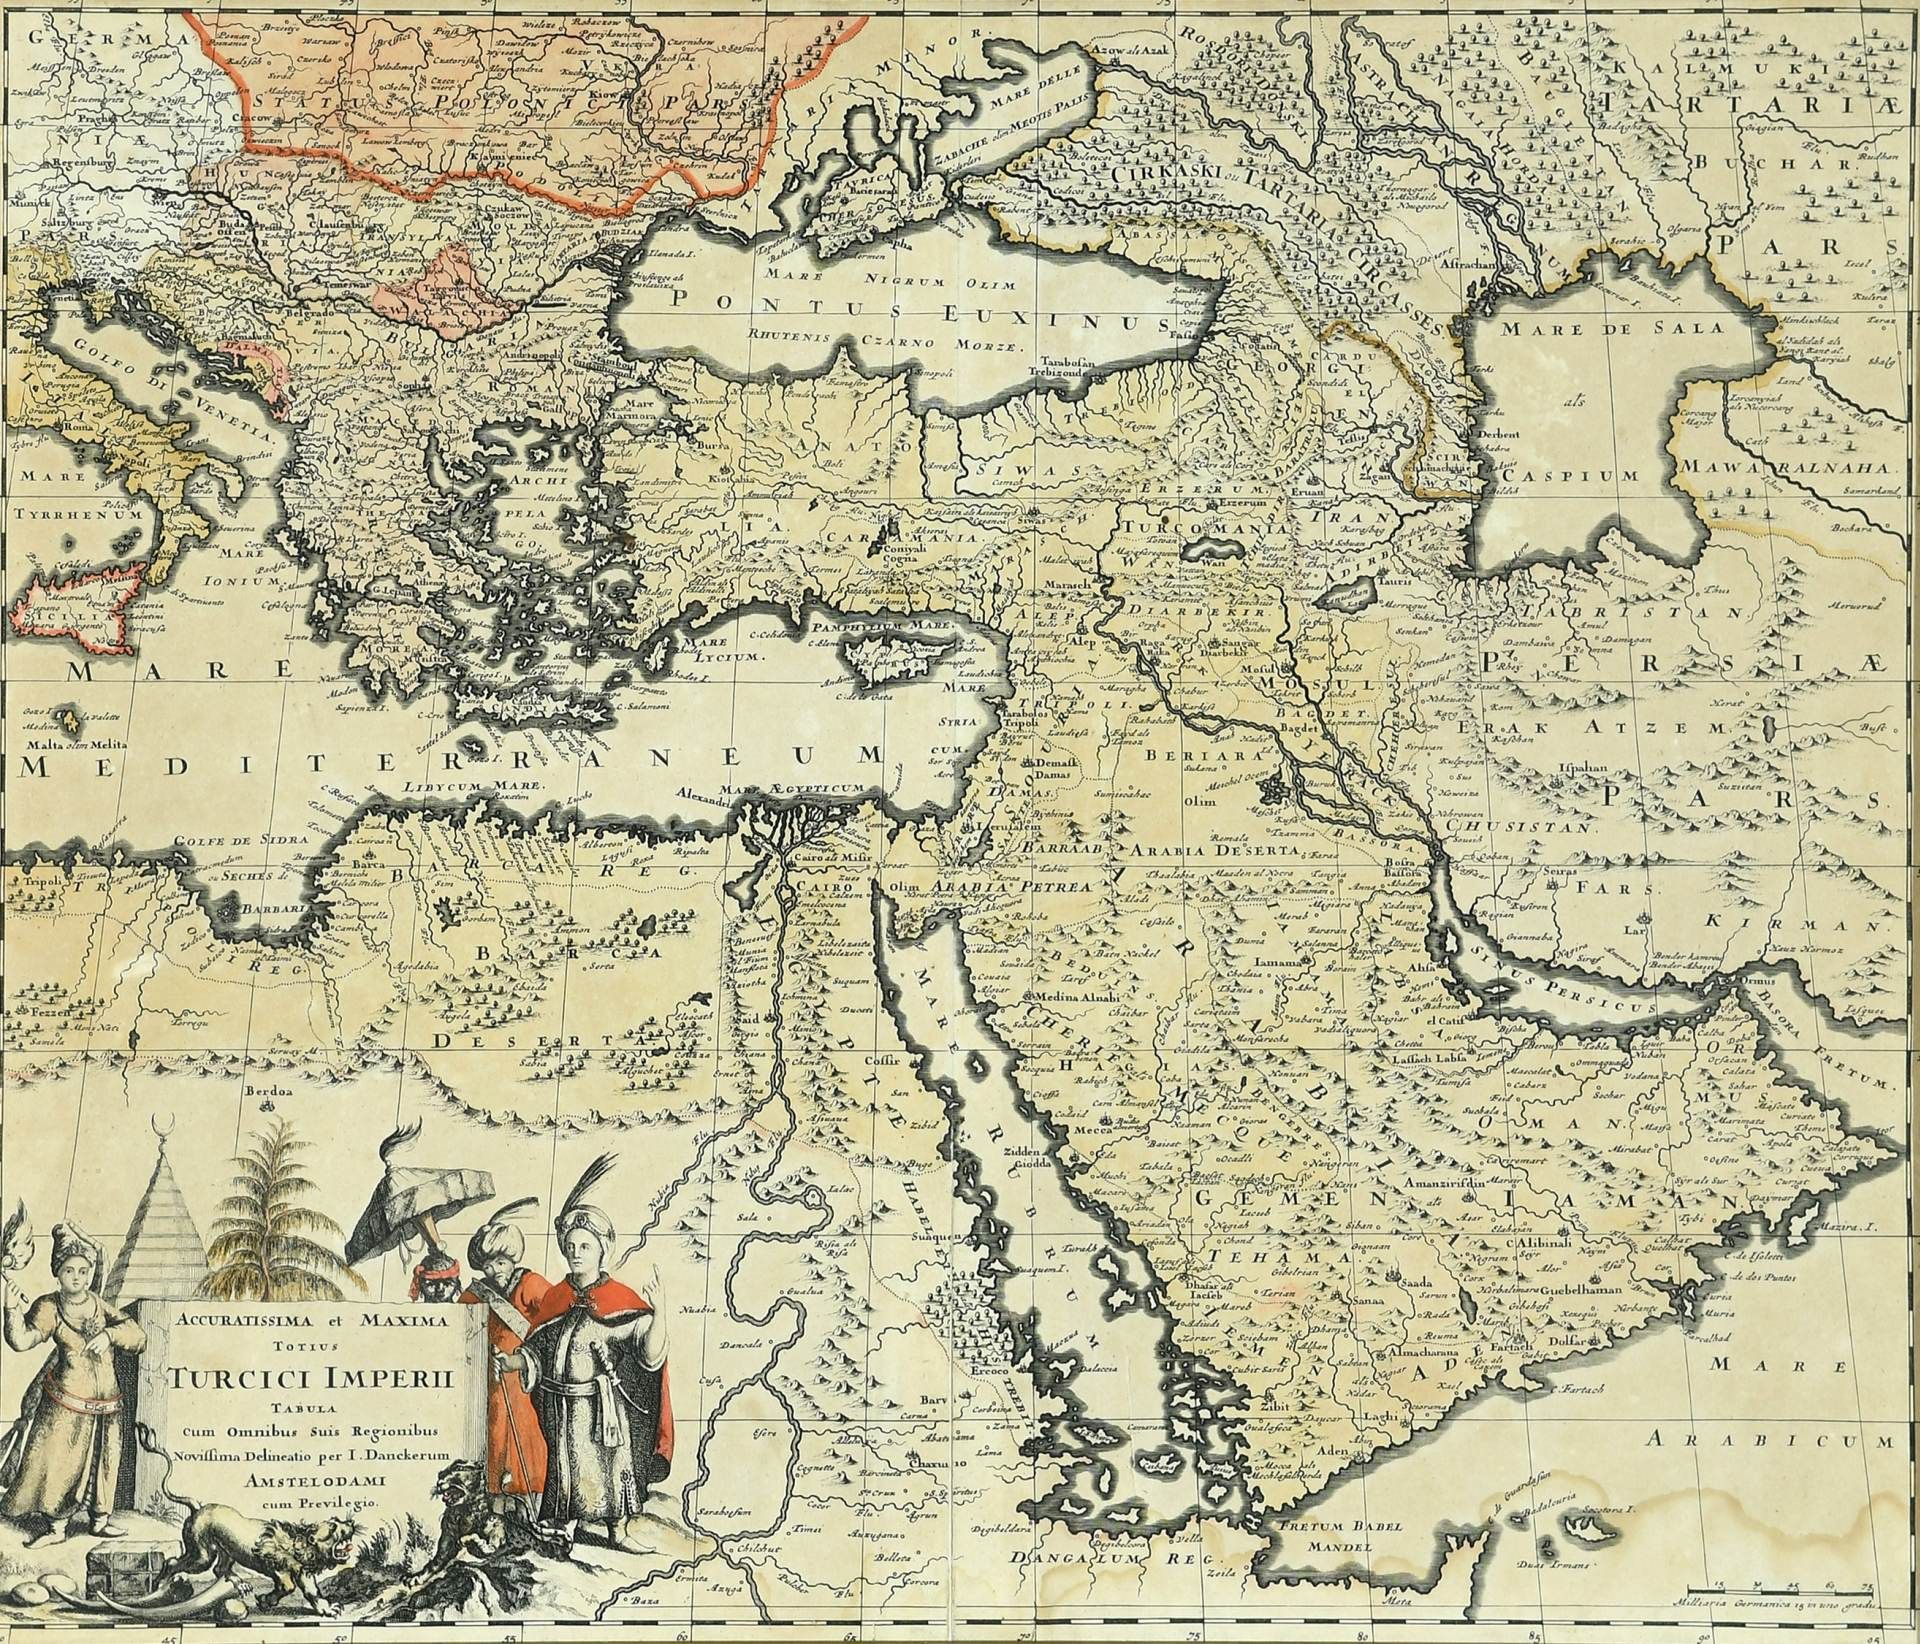 Landkarte "Turcici Imperii" - Image 2 of 2